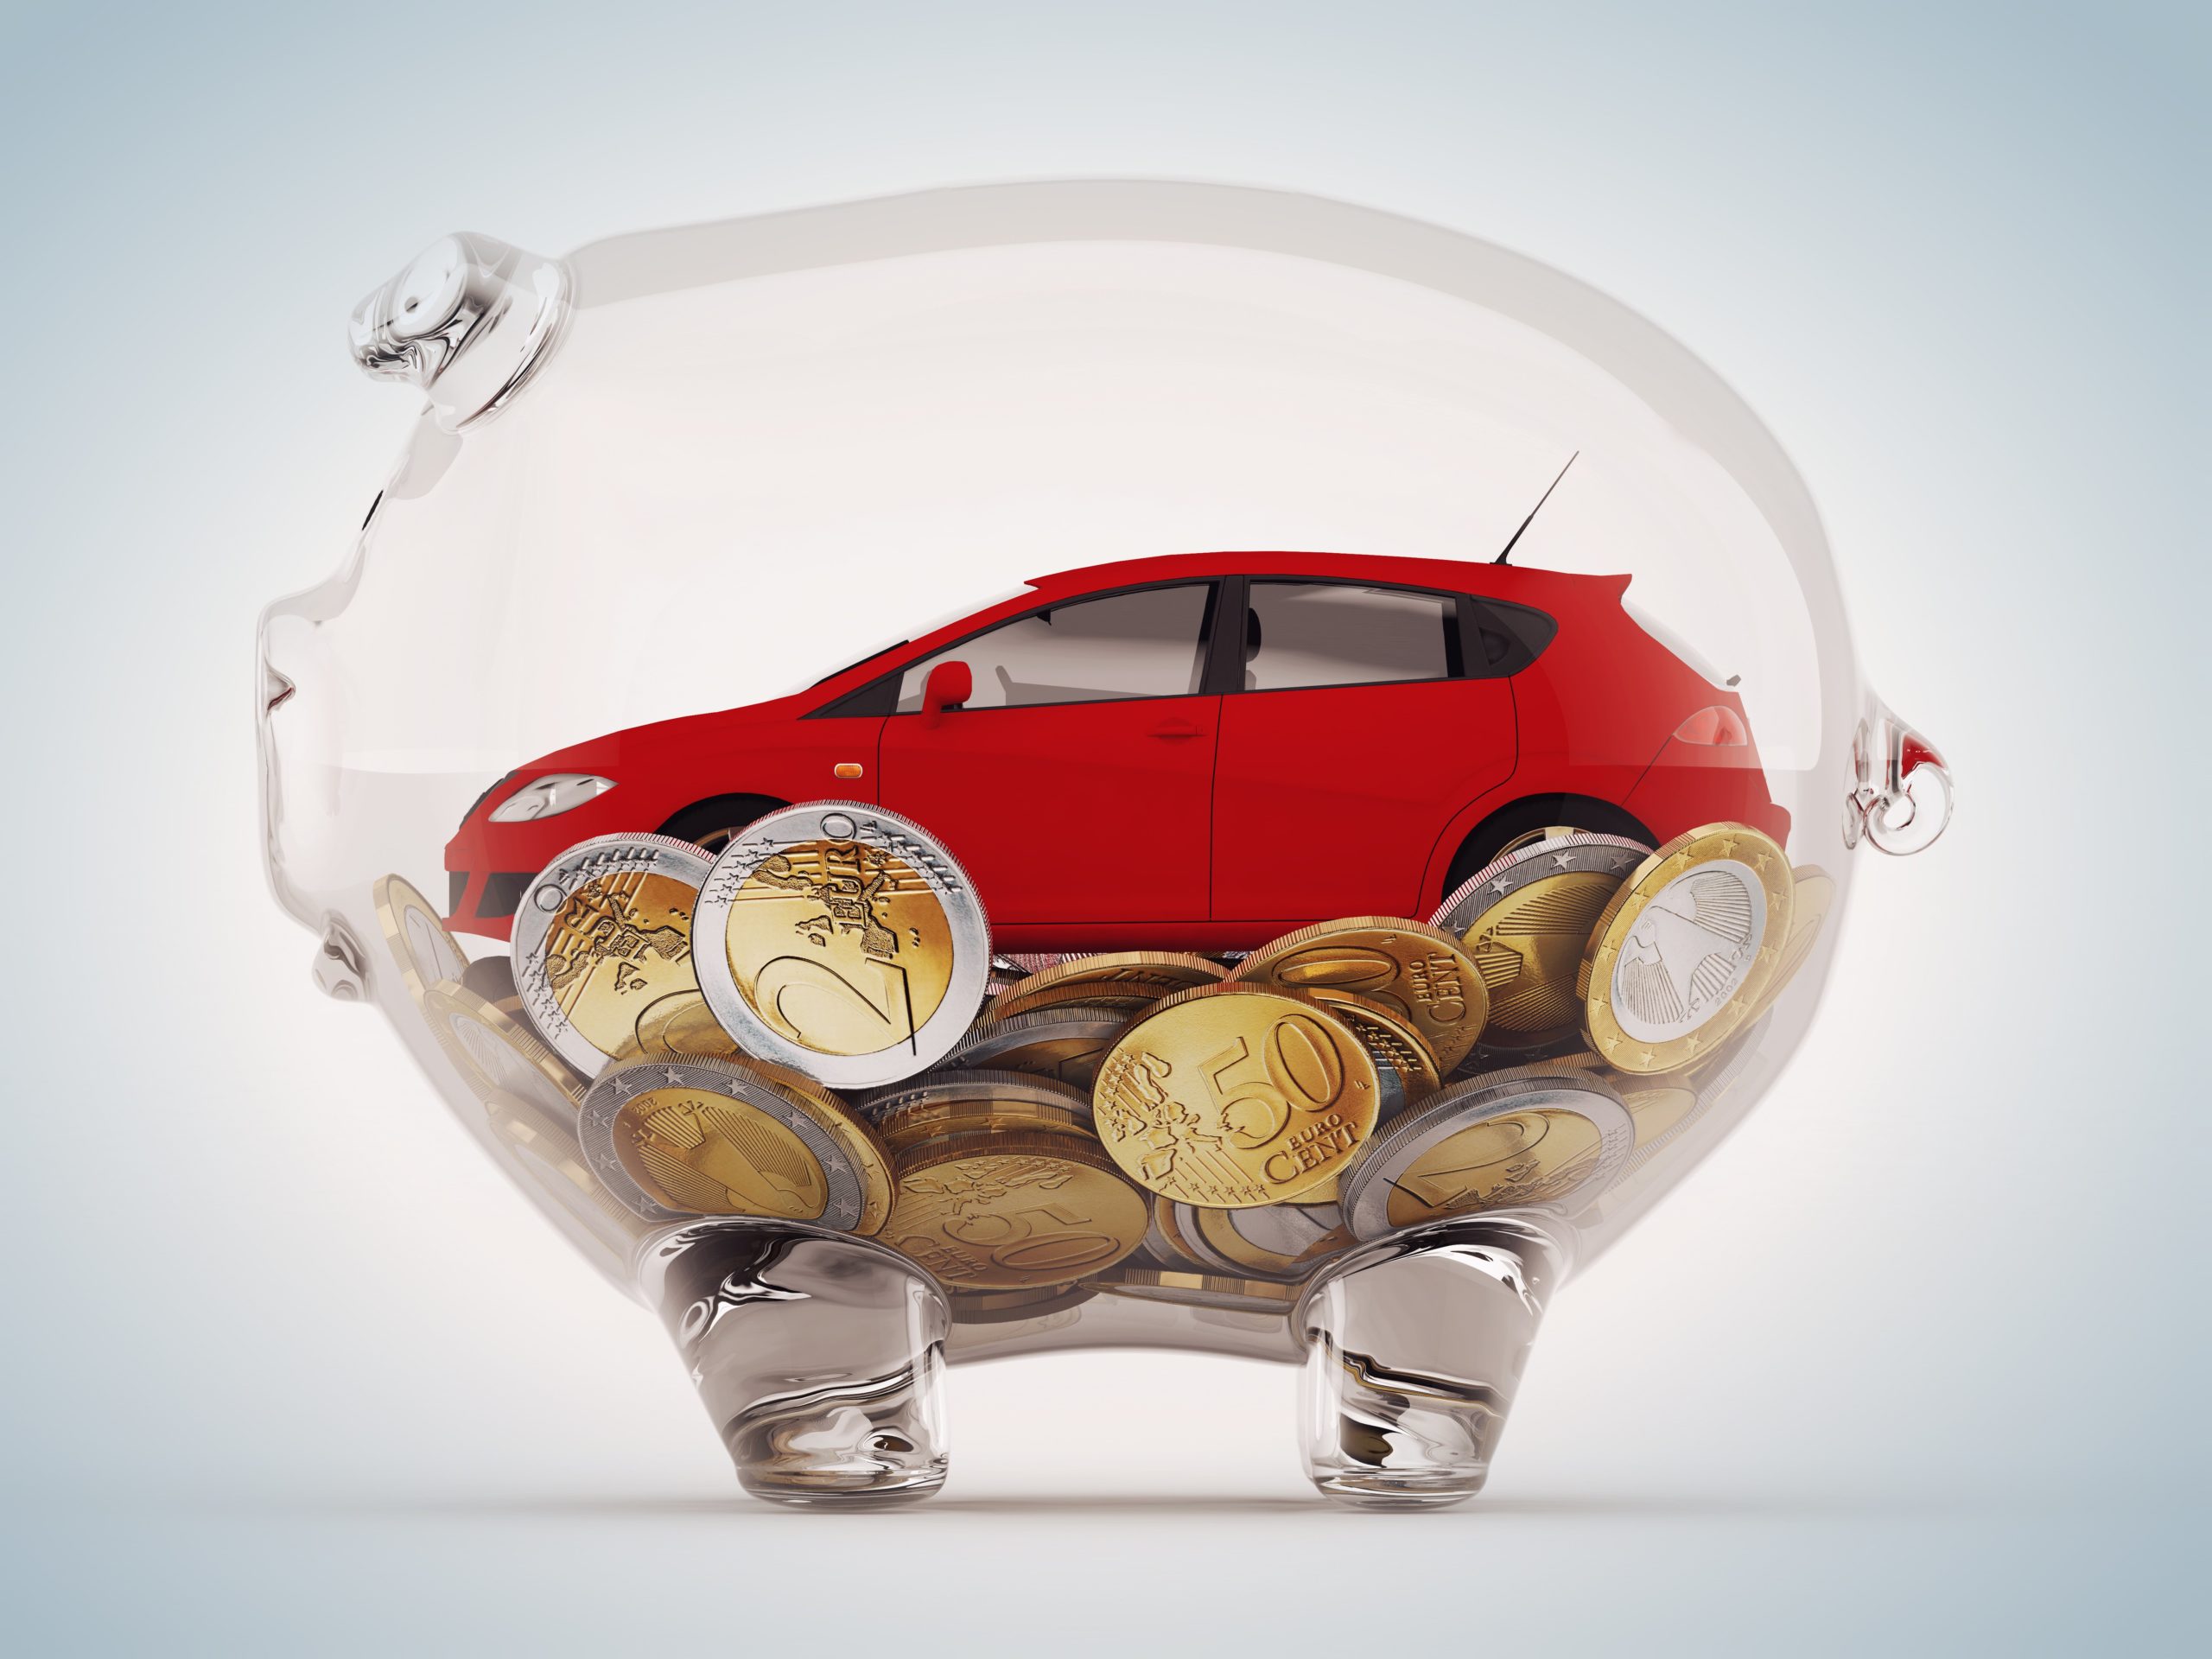 Finding Reasonable Car Insurance Rates